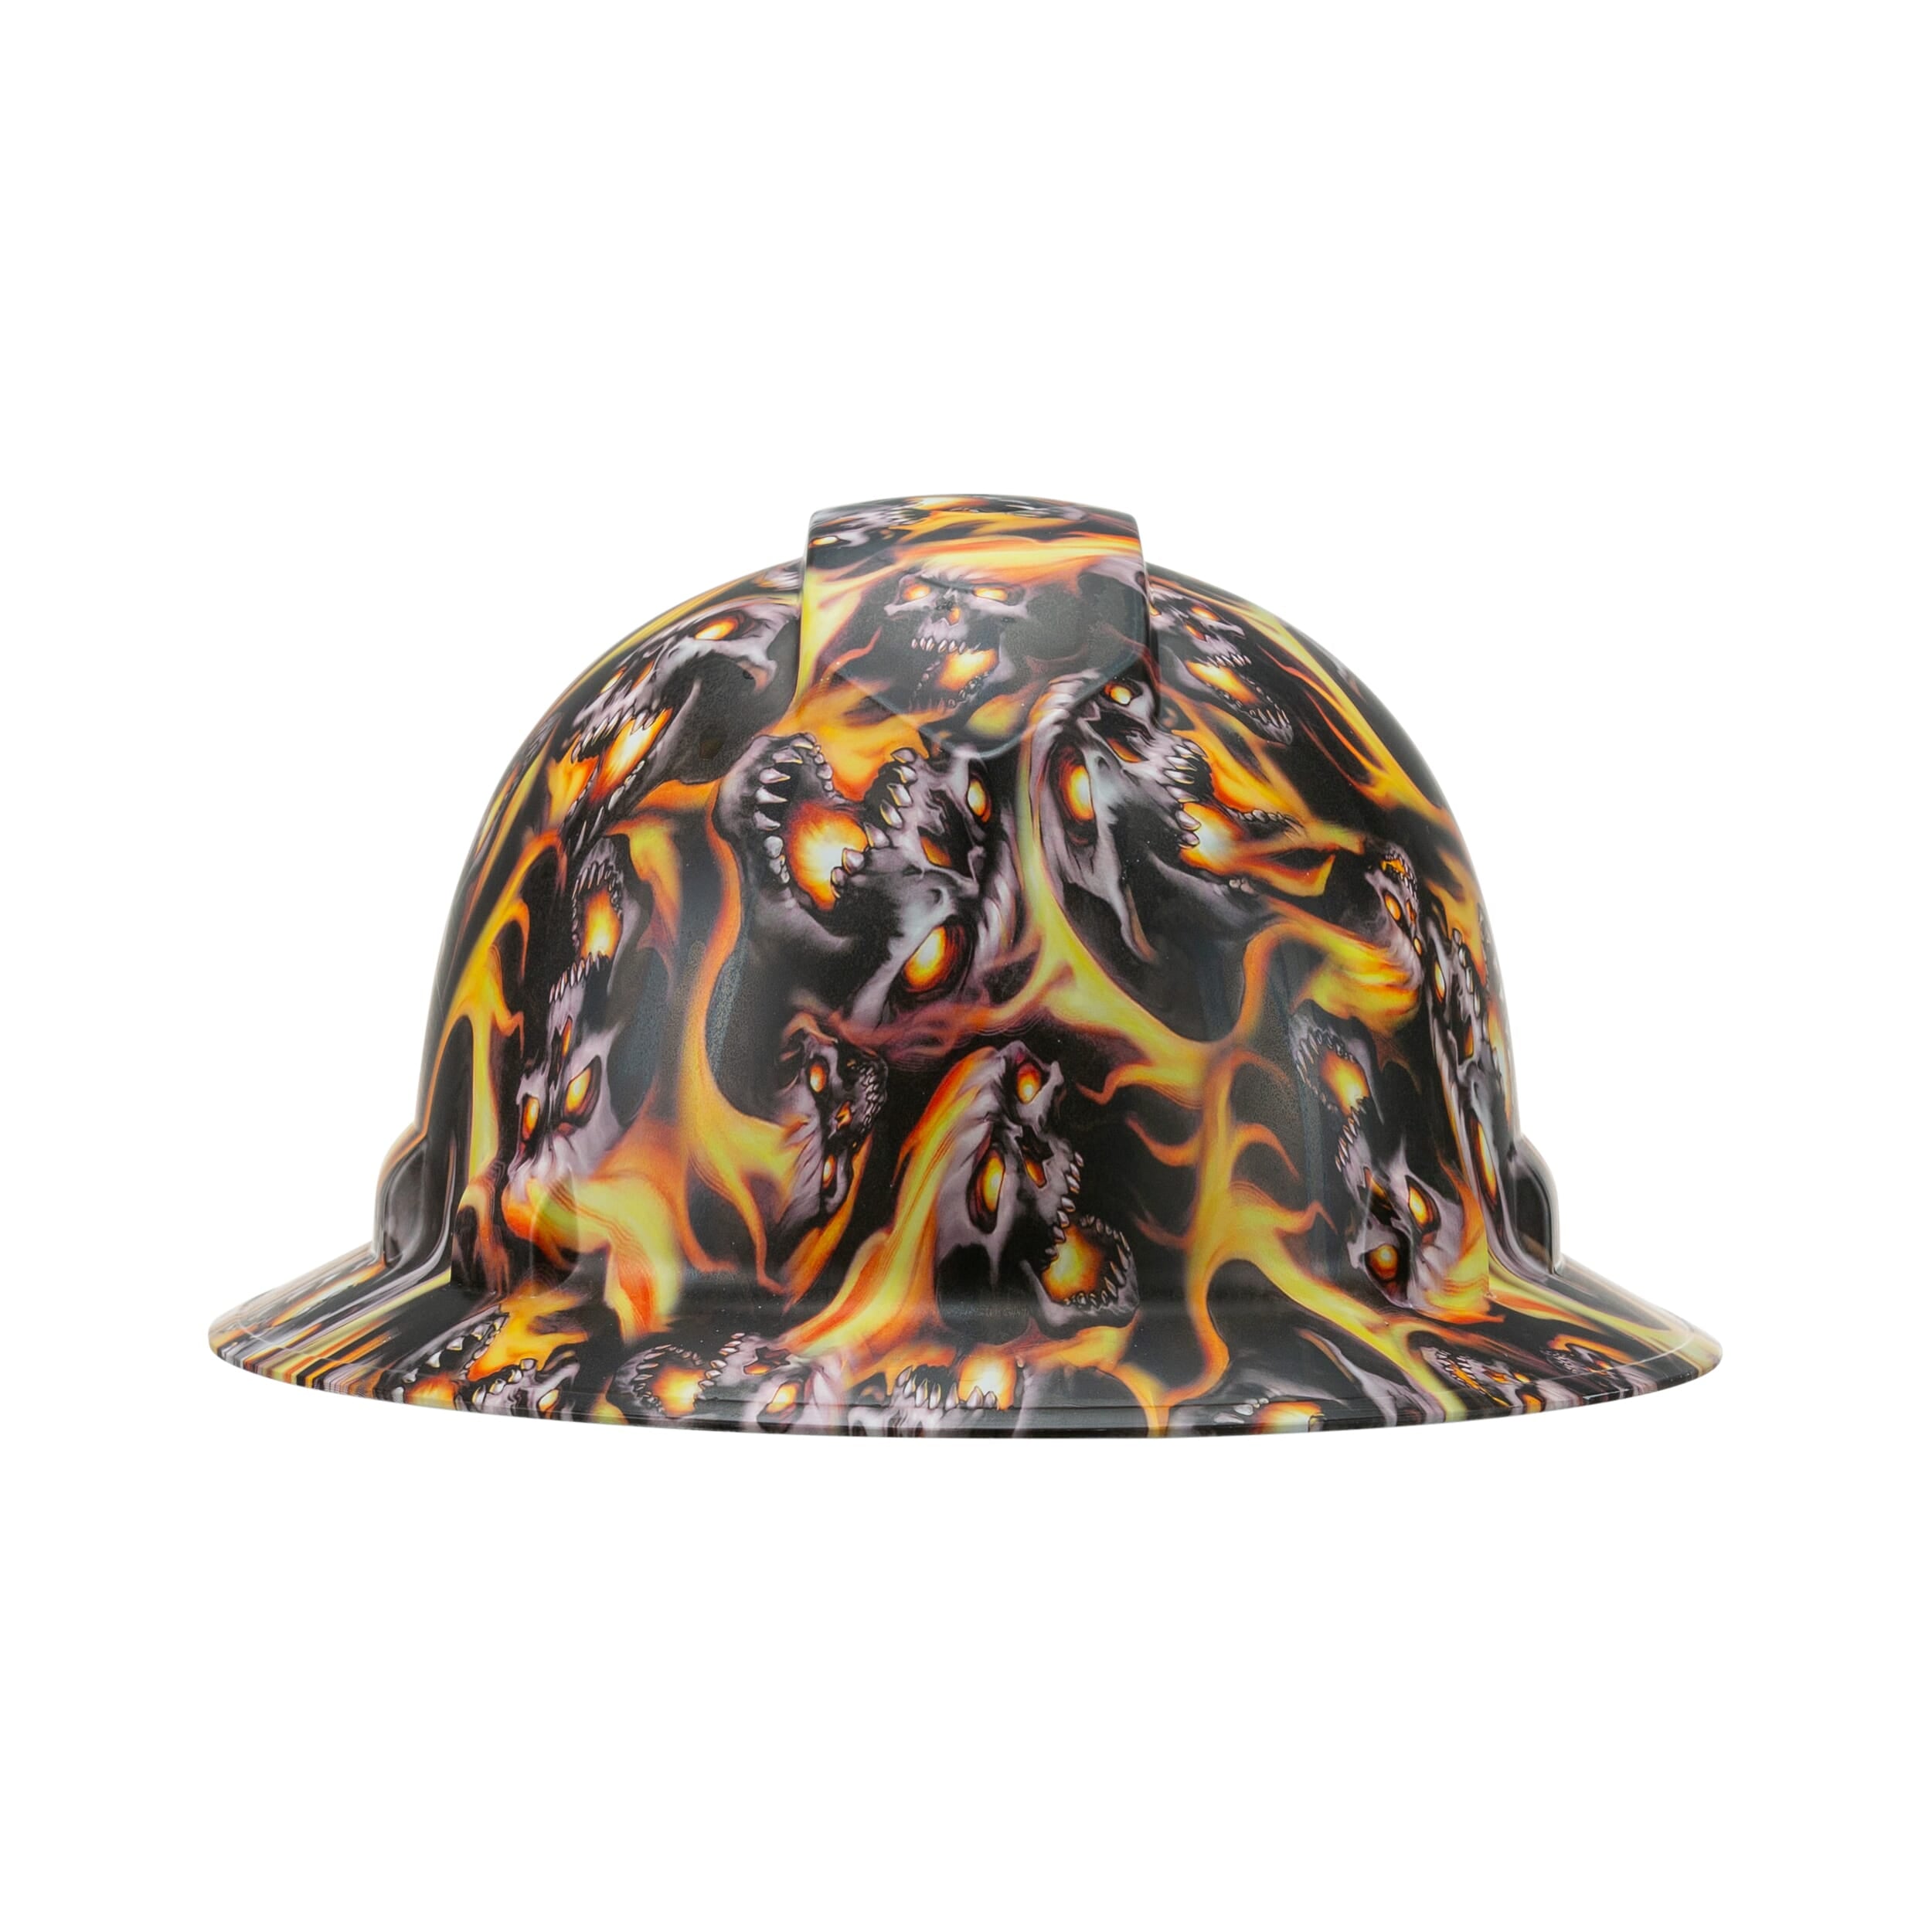 Full Brim Pyramex Hard Hat, Custom Down In Flames Design, Safety Helmet, 6 Point